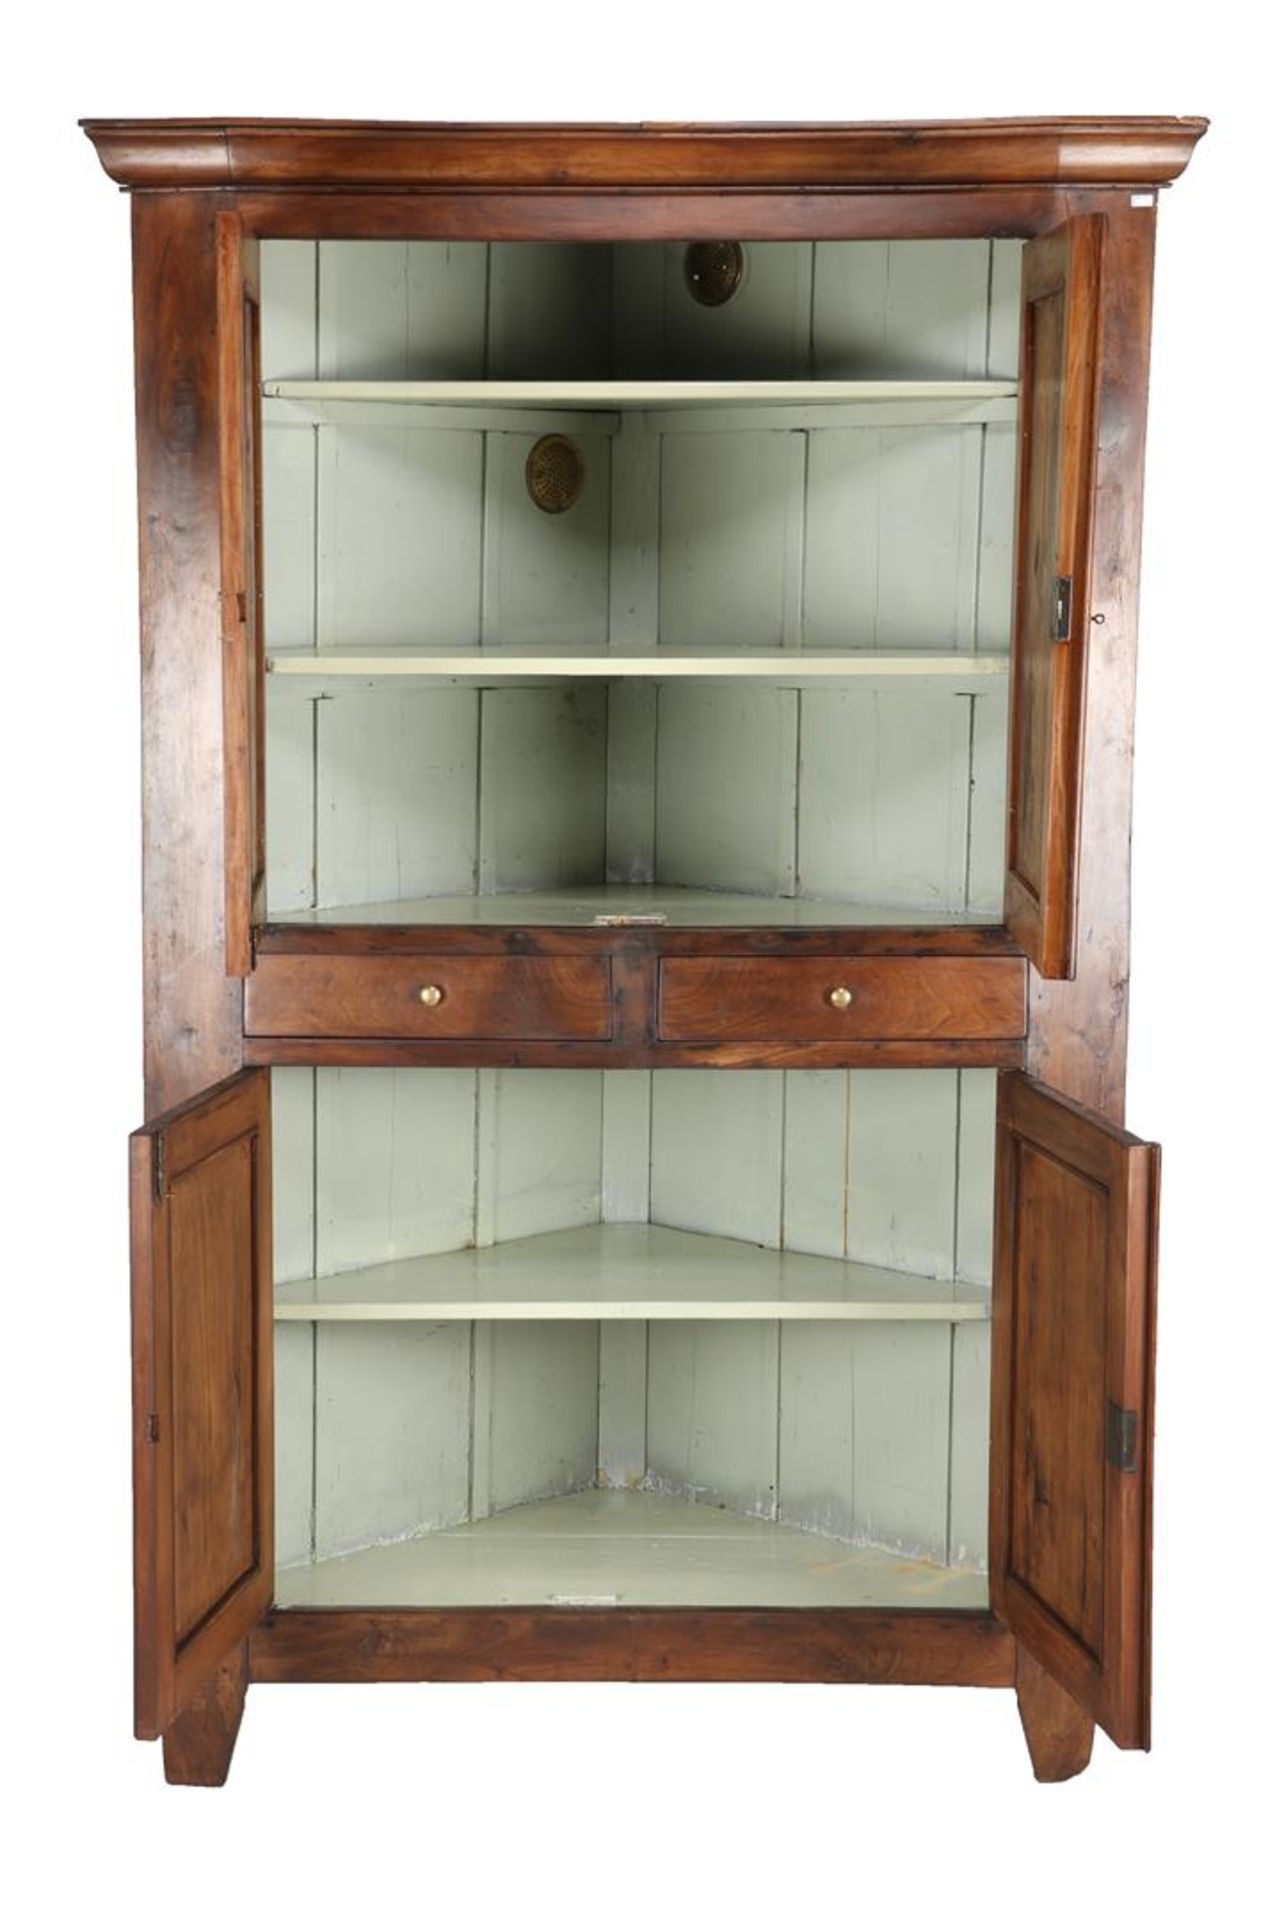 Corner cabinet - Image 2 of 2